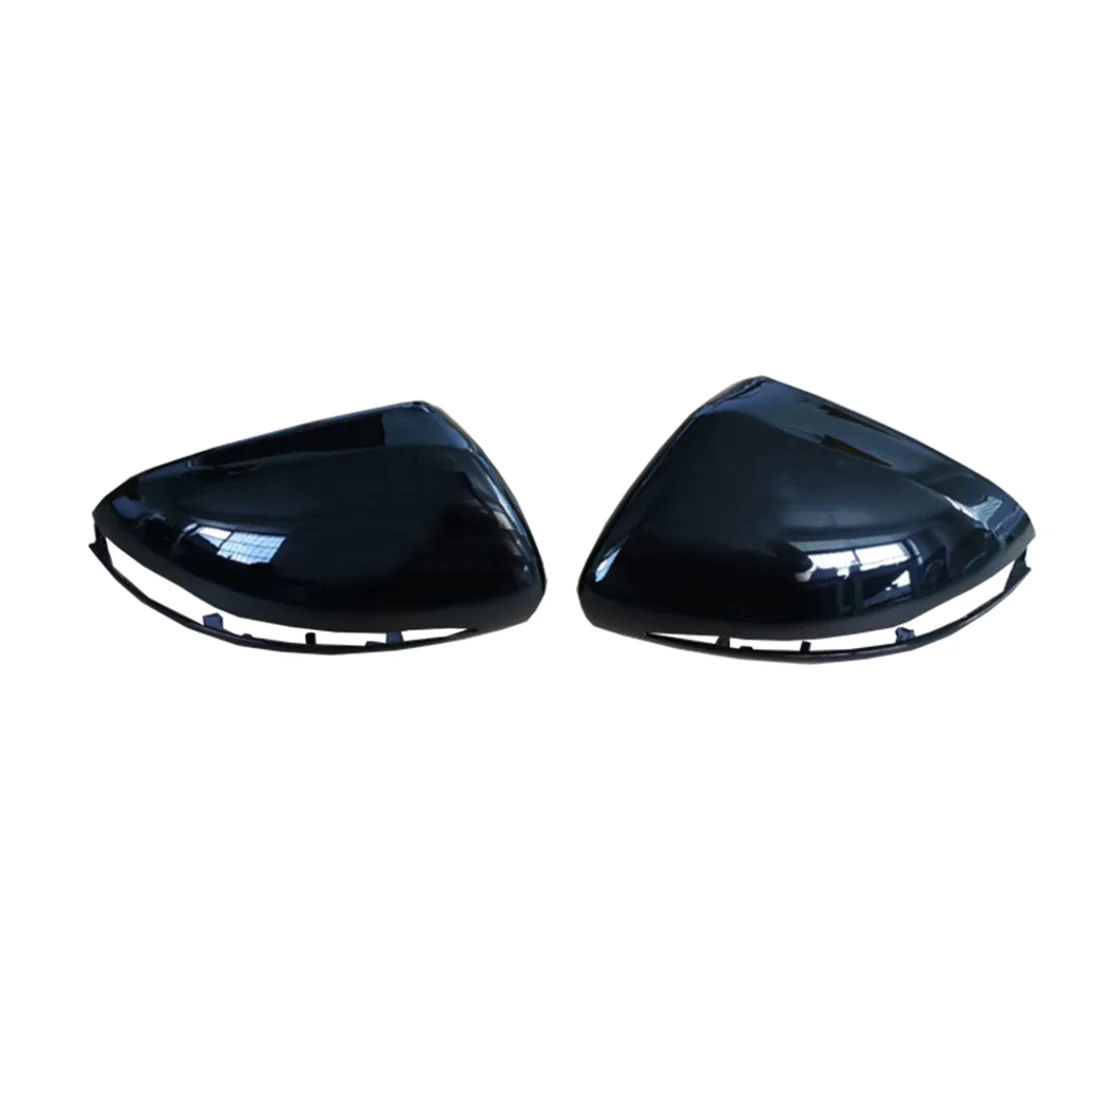 

2Pcs Replacement Rear Mirror Shell Cover Caps for Mercedes Benz W176 W246 W204 W212 W221 C117 X204 X156 Bright Black B